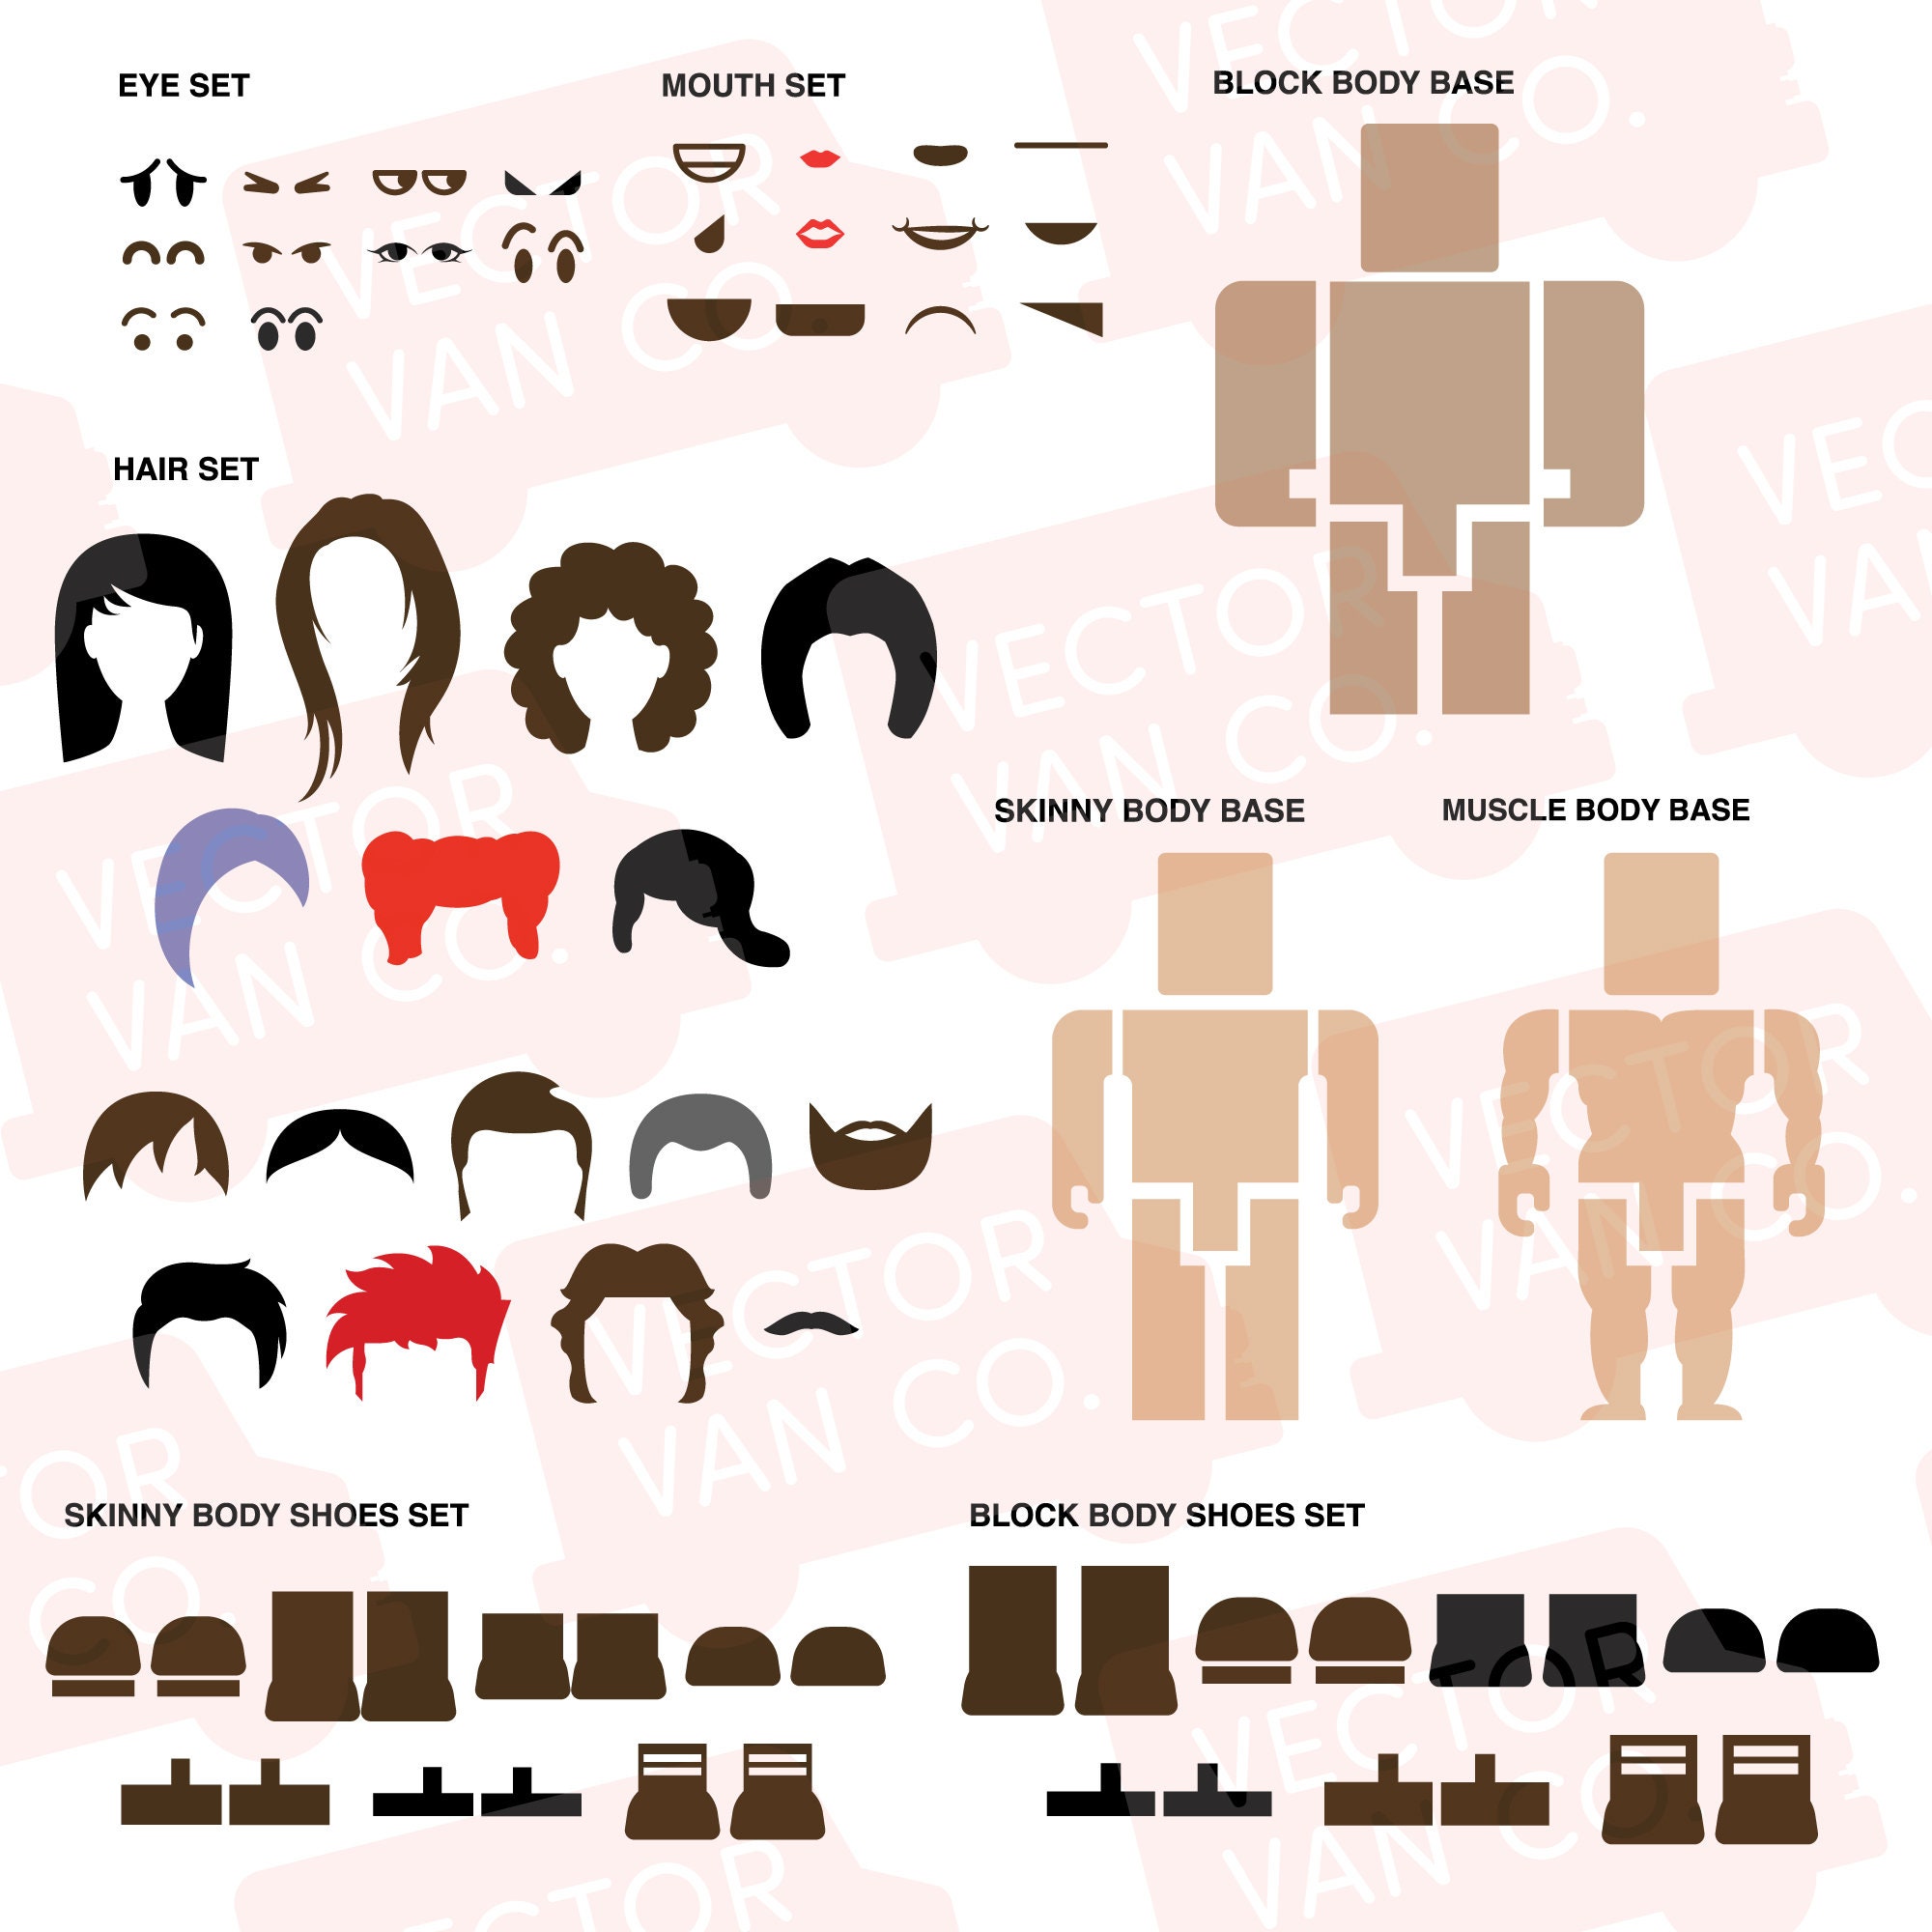 Roblox Svg Character Bundle Set Roblox Emoji Svg (Instant Download) 